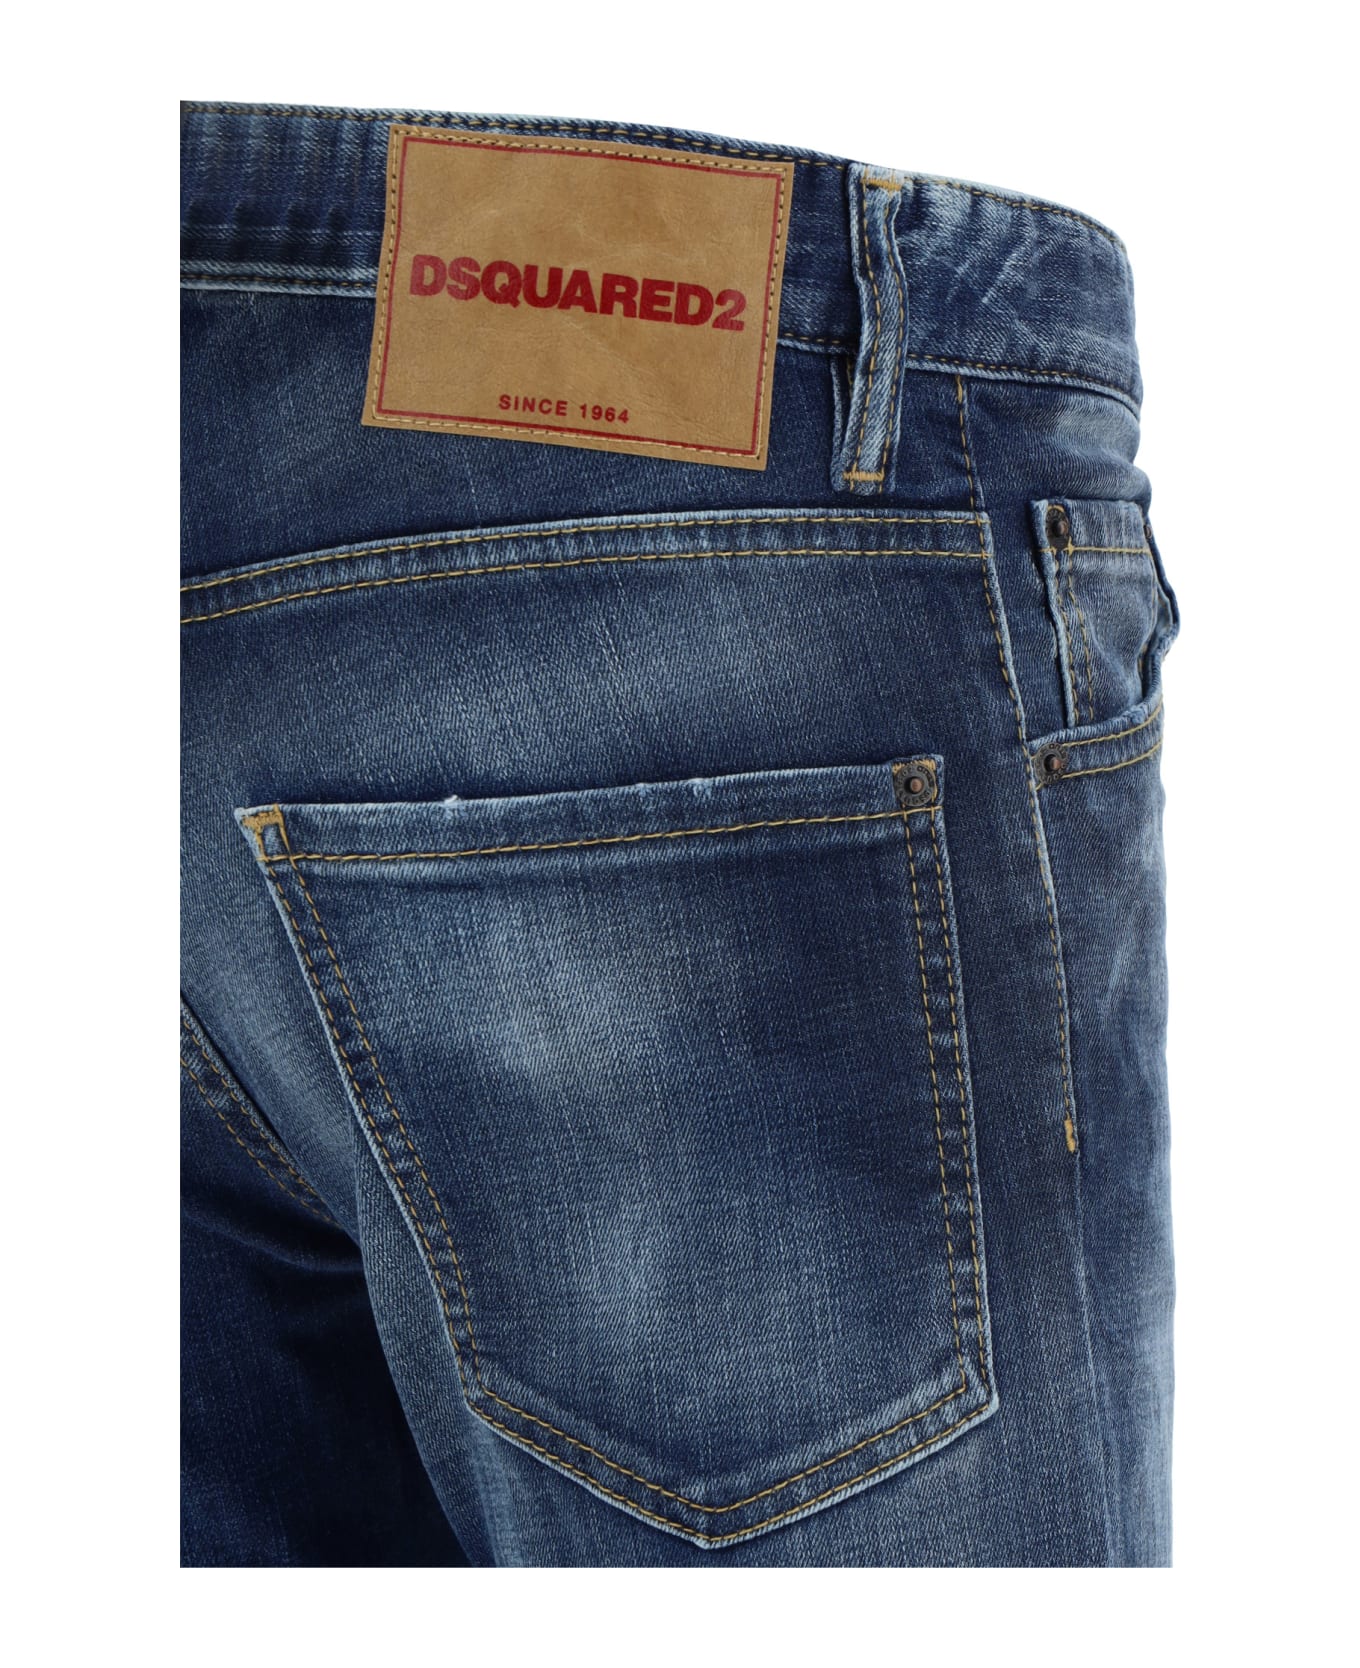 Dsquared2 Cool Guy Jeans - Denim デニム